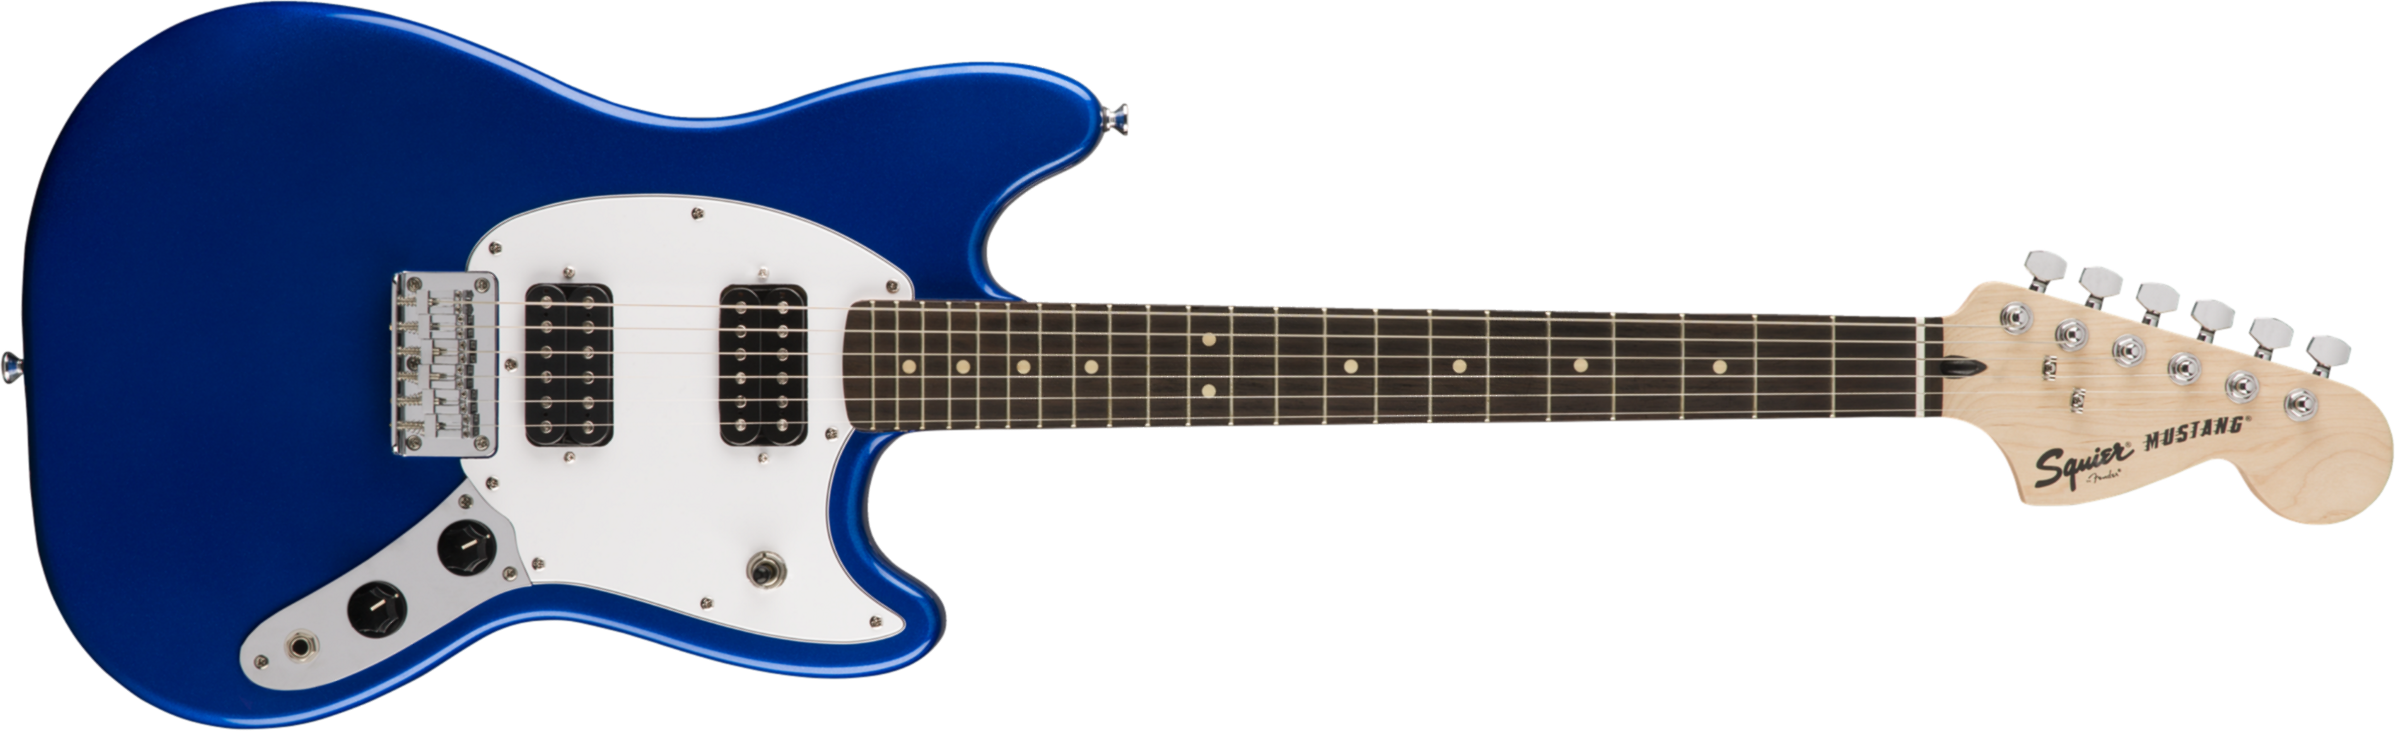 Squier Mustang Bullet Hh 2019 Ht Lau - Imperial Blue - Retro rock electric guitar - Main picture